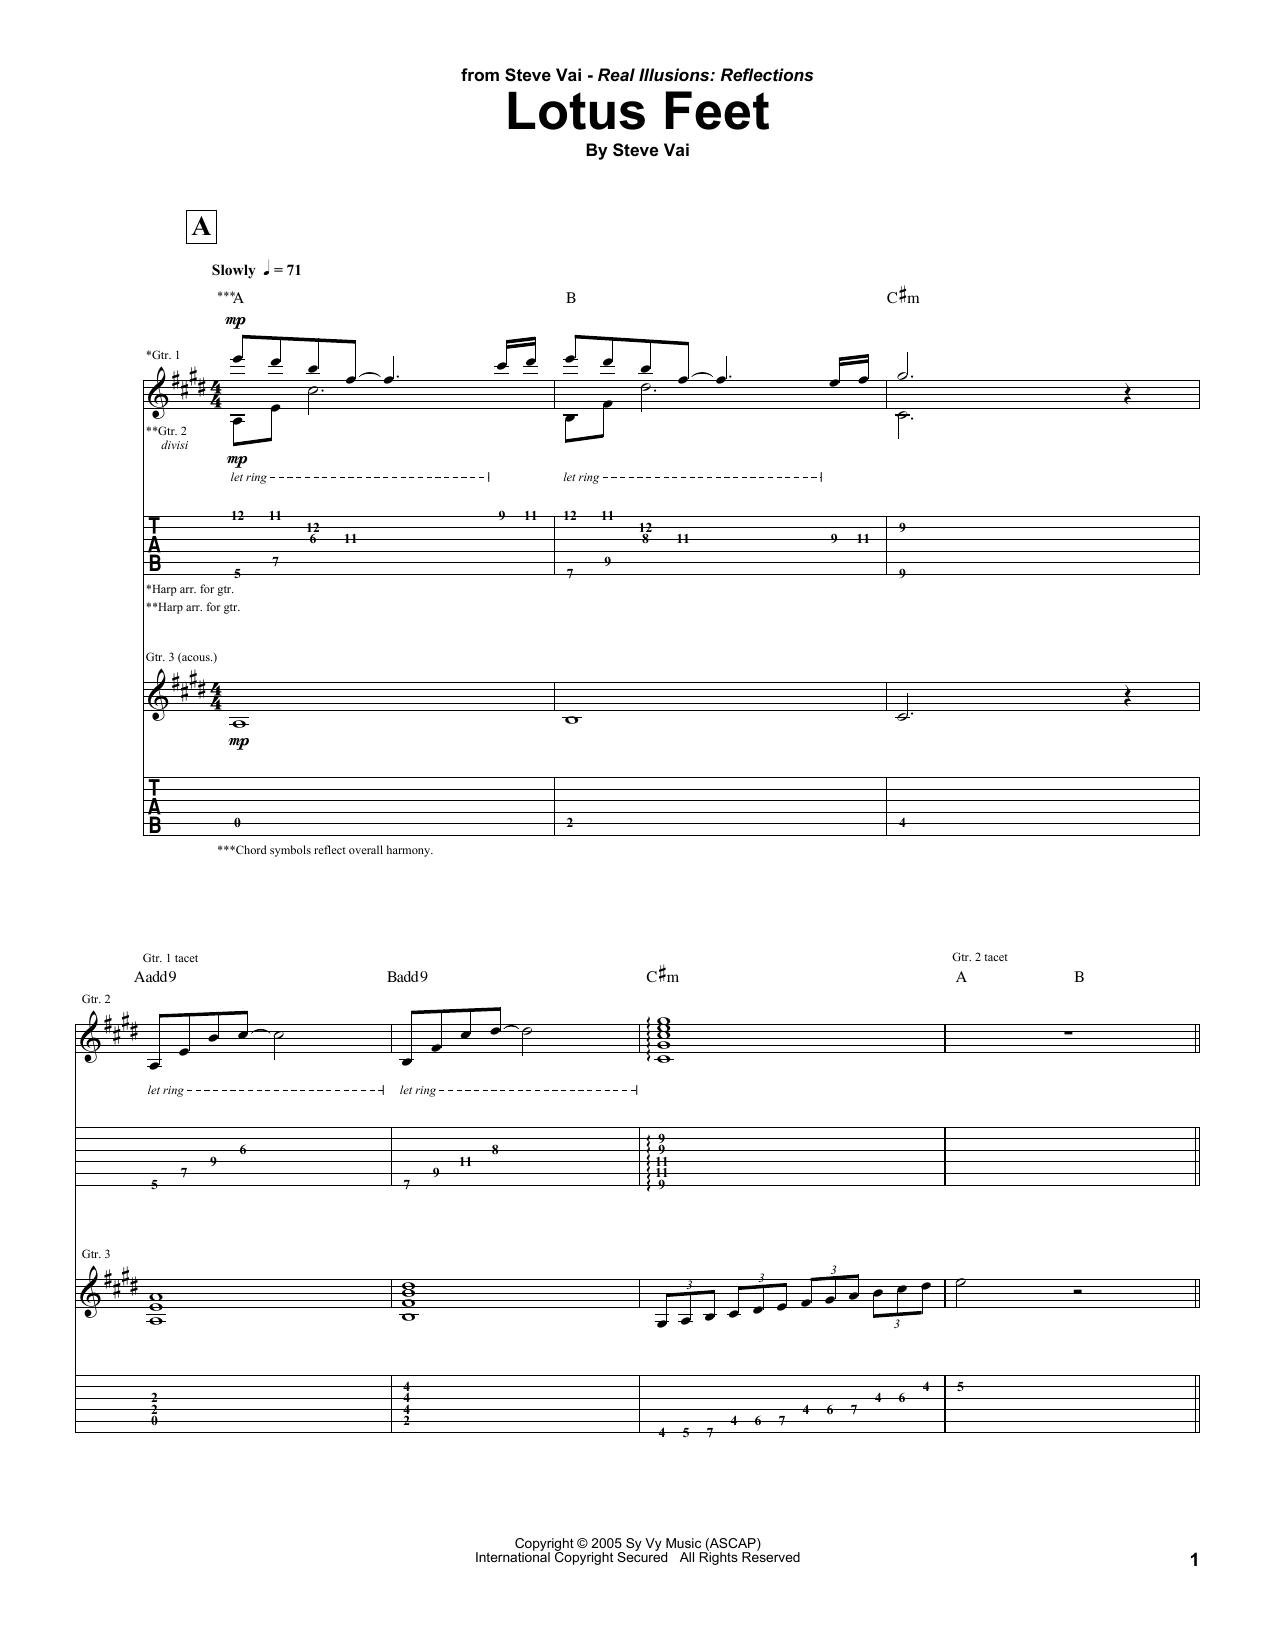 Steve Vai Lotus Feet Sheet Music Notes & Chords for Guitar Tab - Download or Print PDF